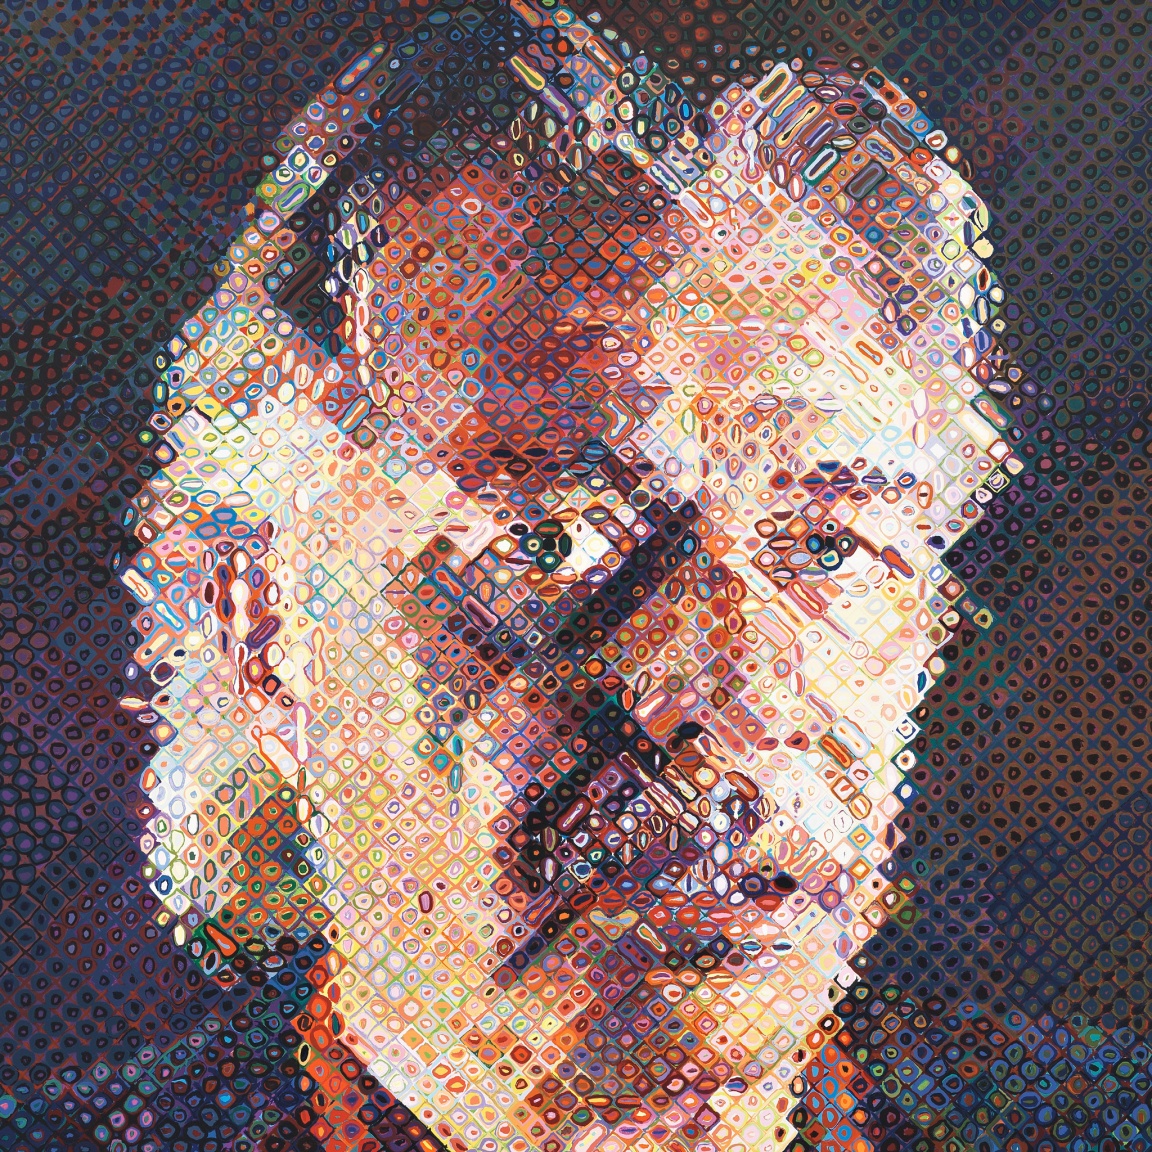 Detail of "John" (1998) by Chuck Close